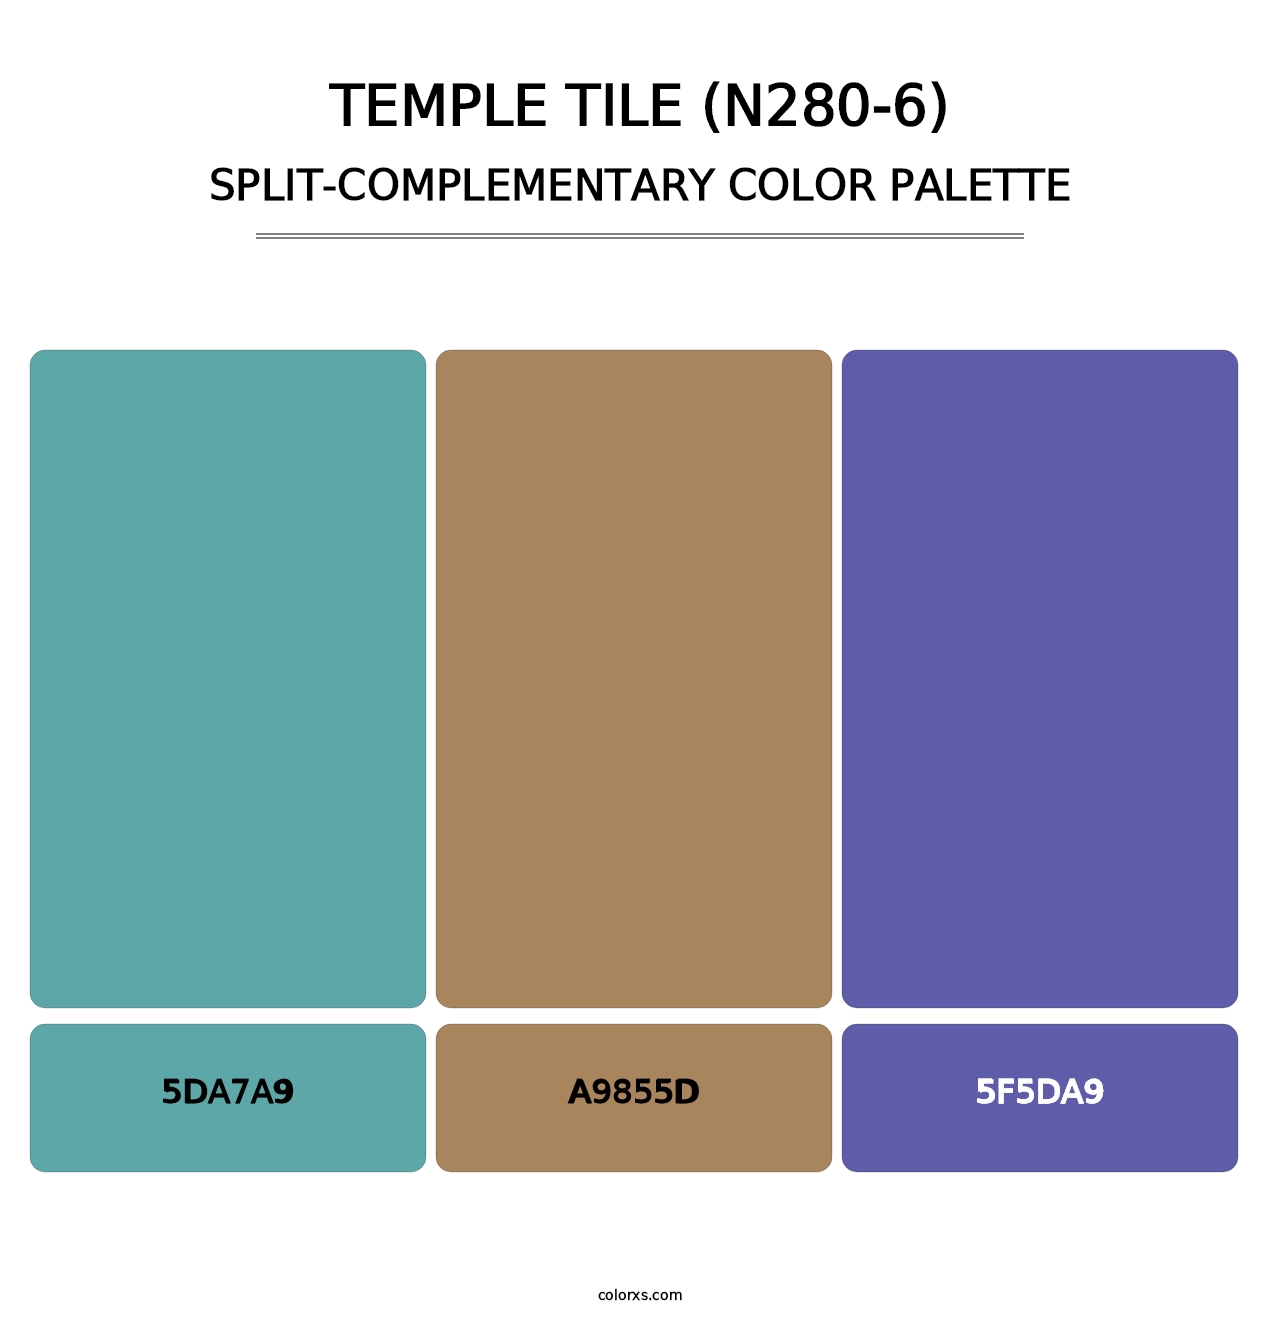 Temple Tile (N280-6) - Split-Complementary Color Palette